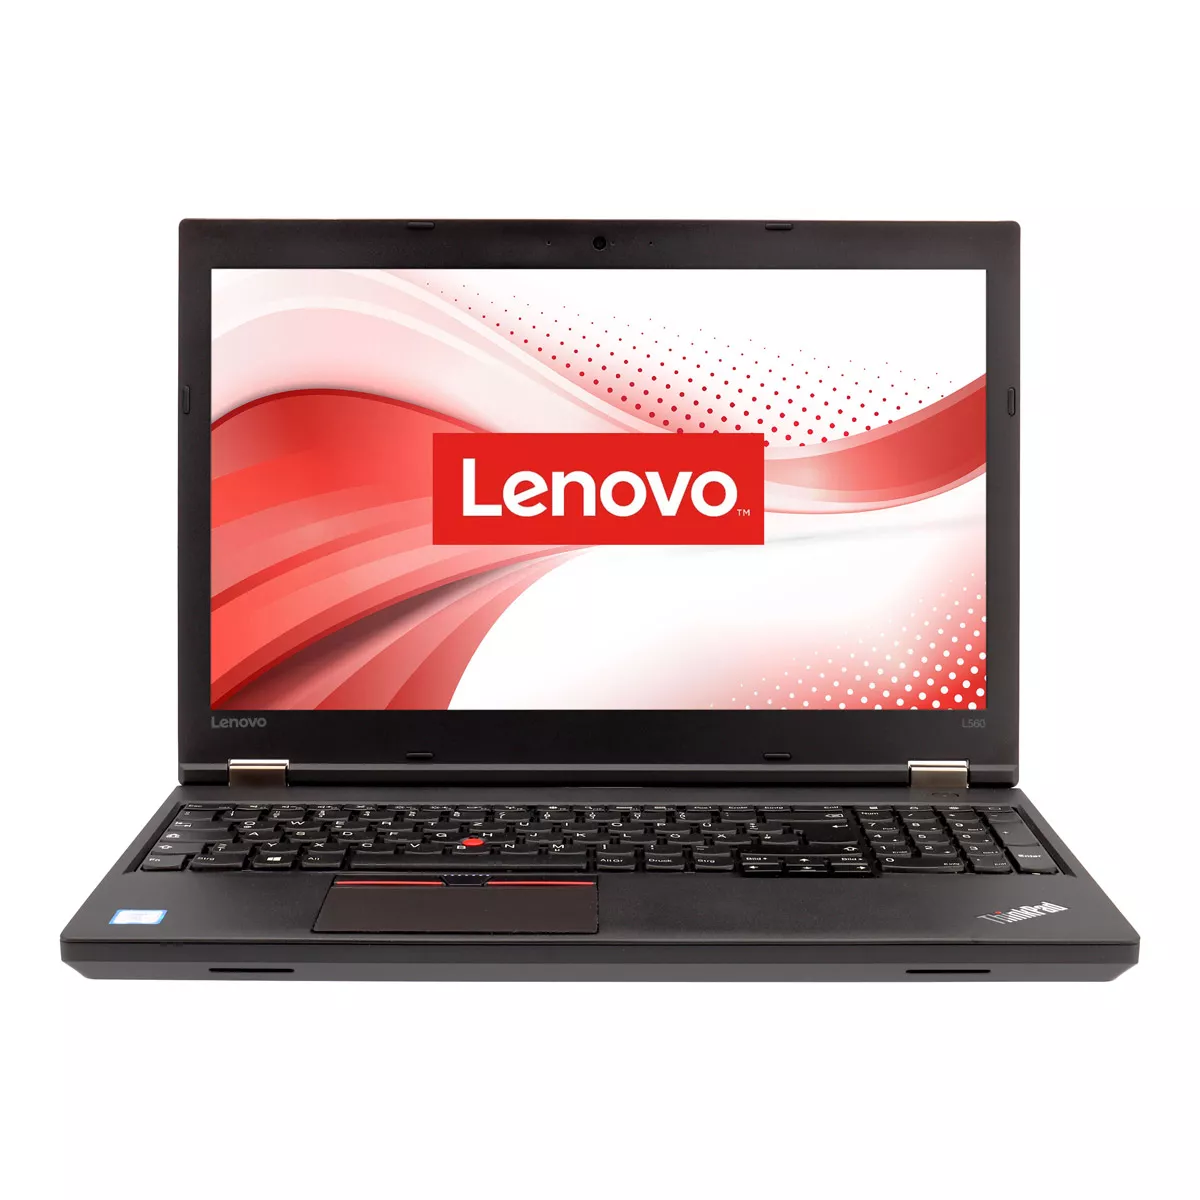 Lenovo ThinkPad L560 Core i5 6300U Full-HD 240 GB SSD Webcam A